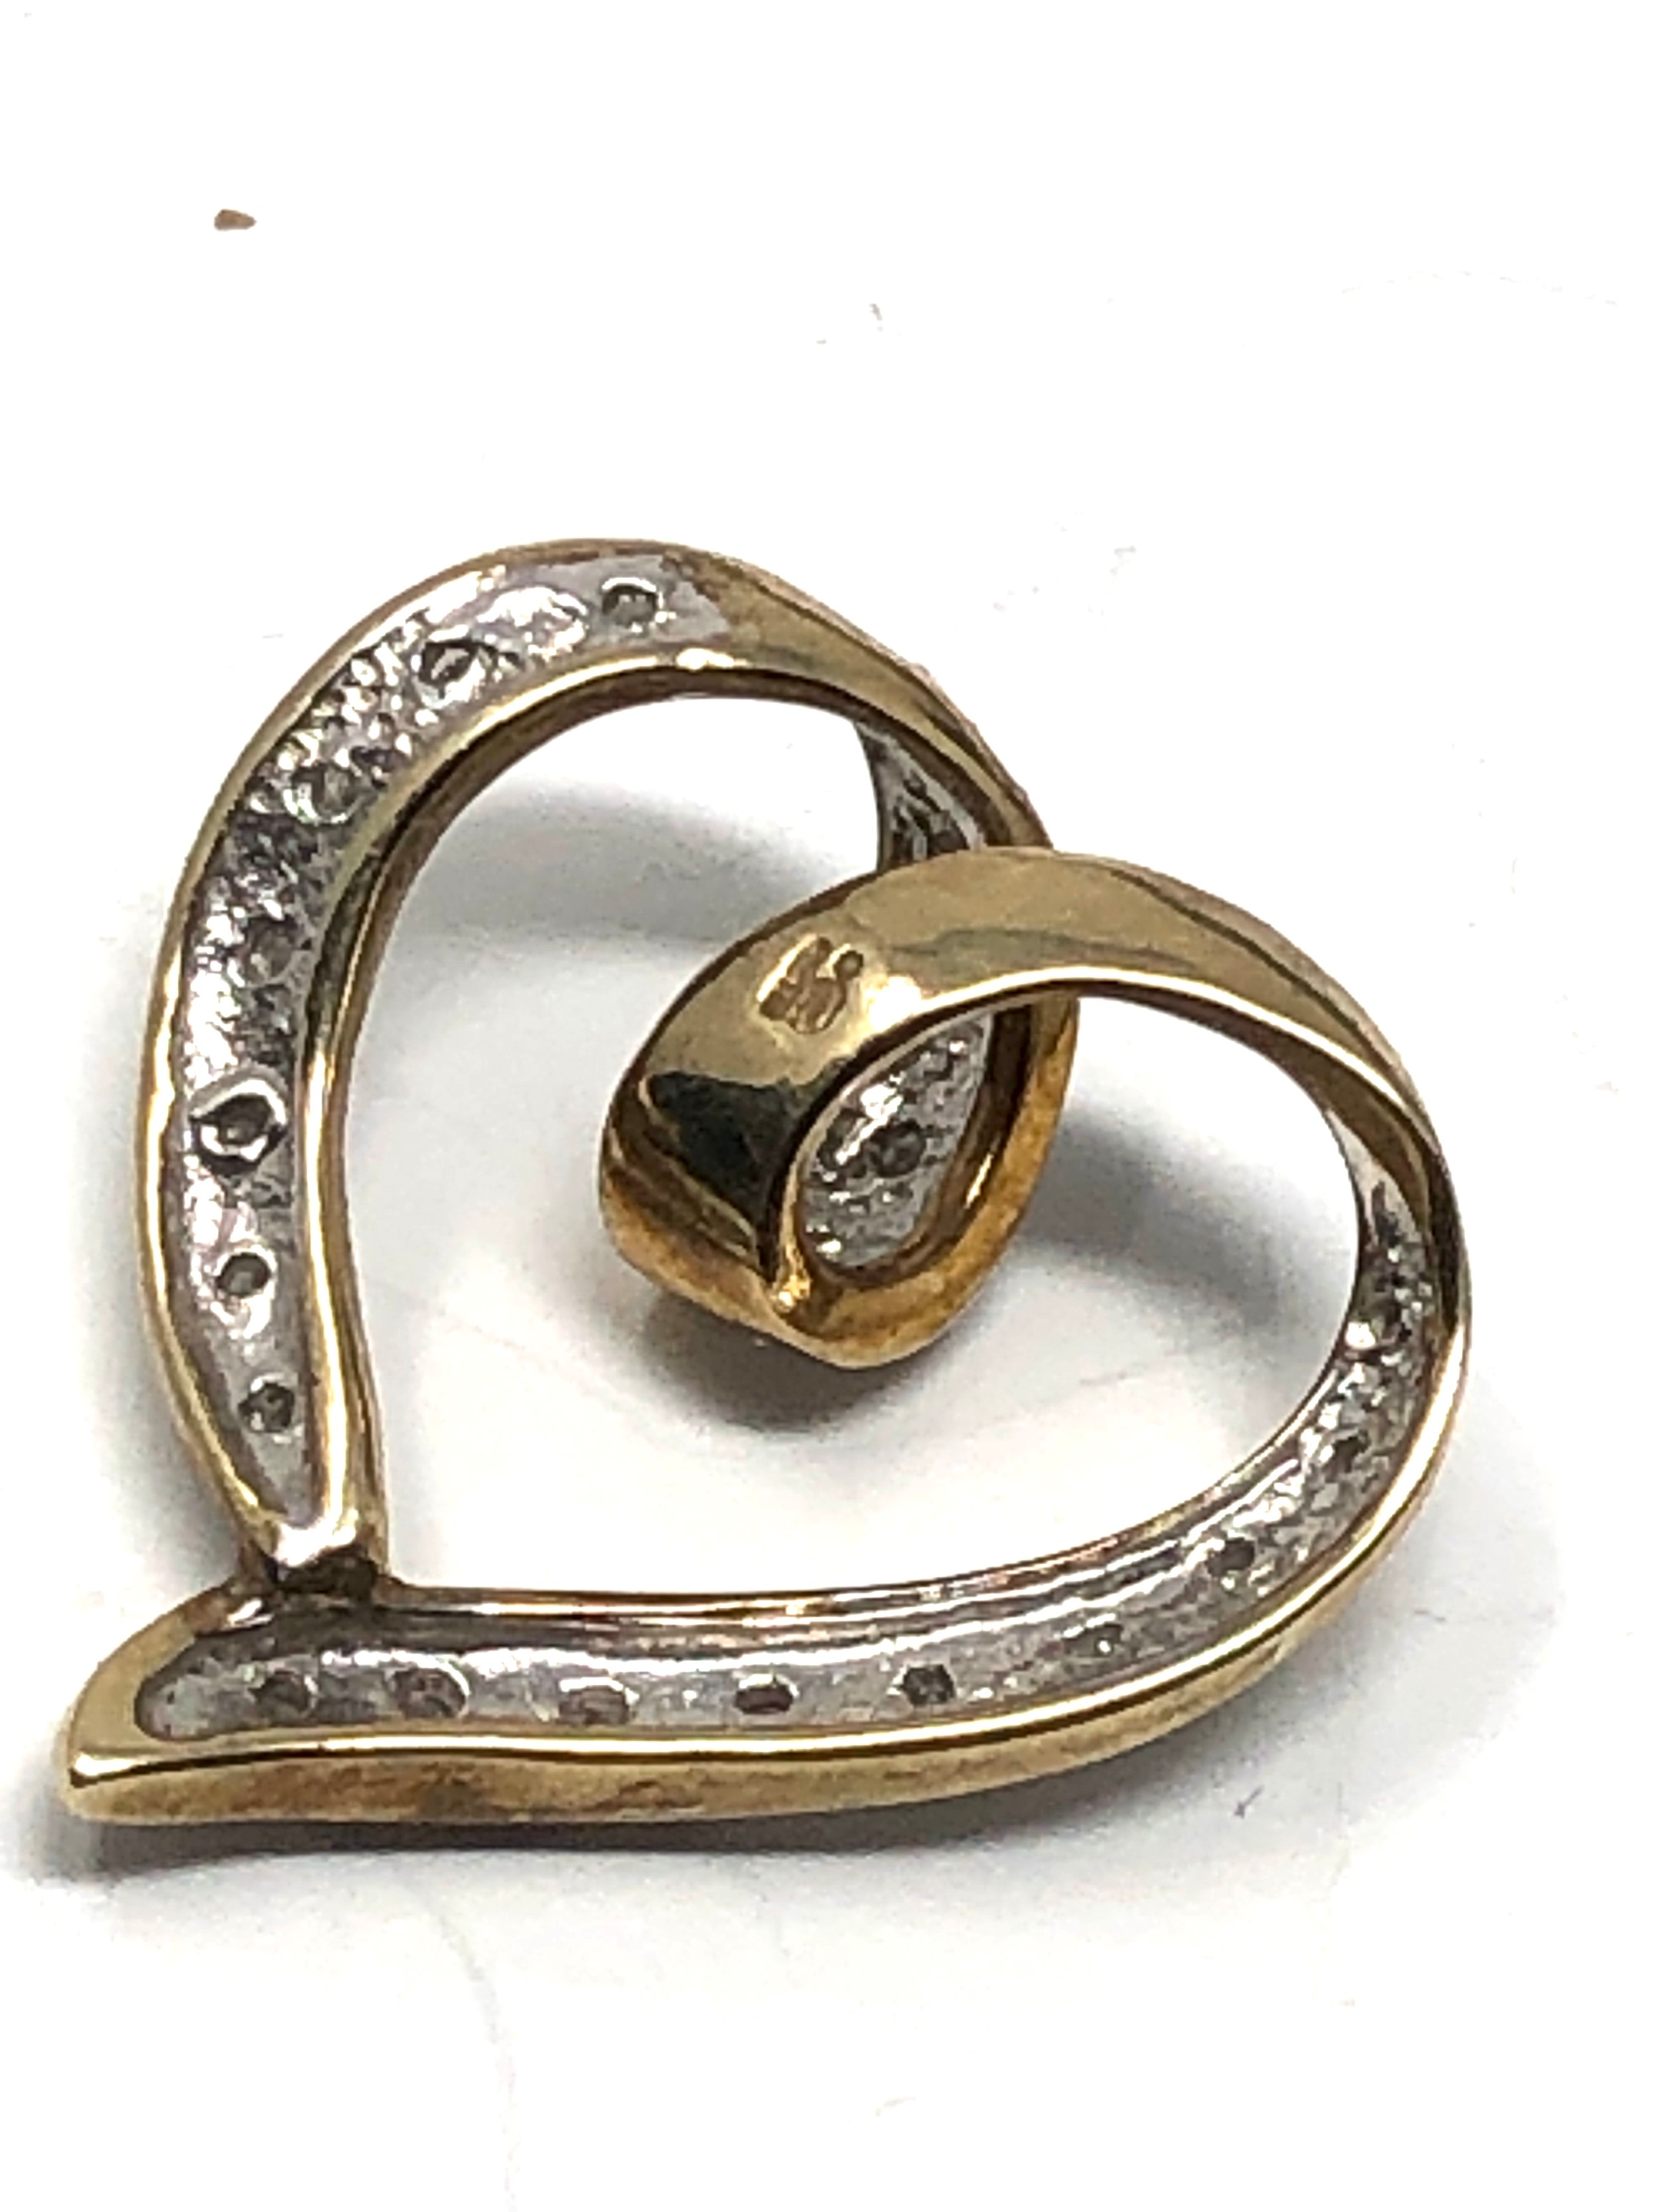 9ct gold diamond set heart pendant measures approx 2cm drop by 1.8cm wide weight 2.1g - Bild 4 aus 4